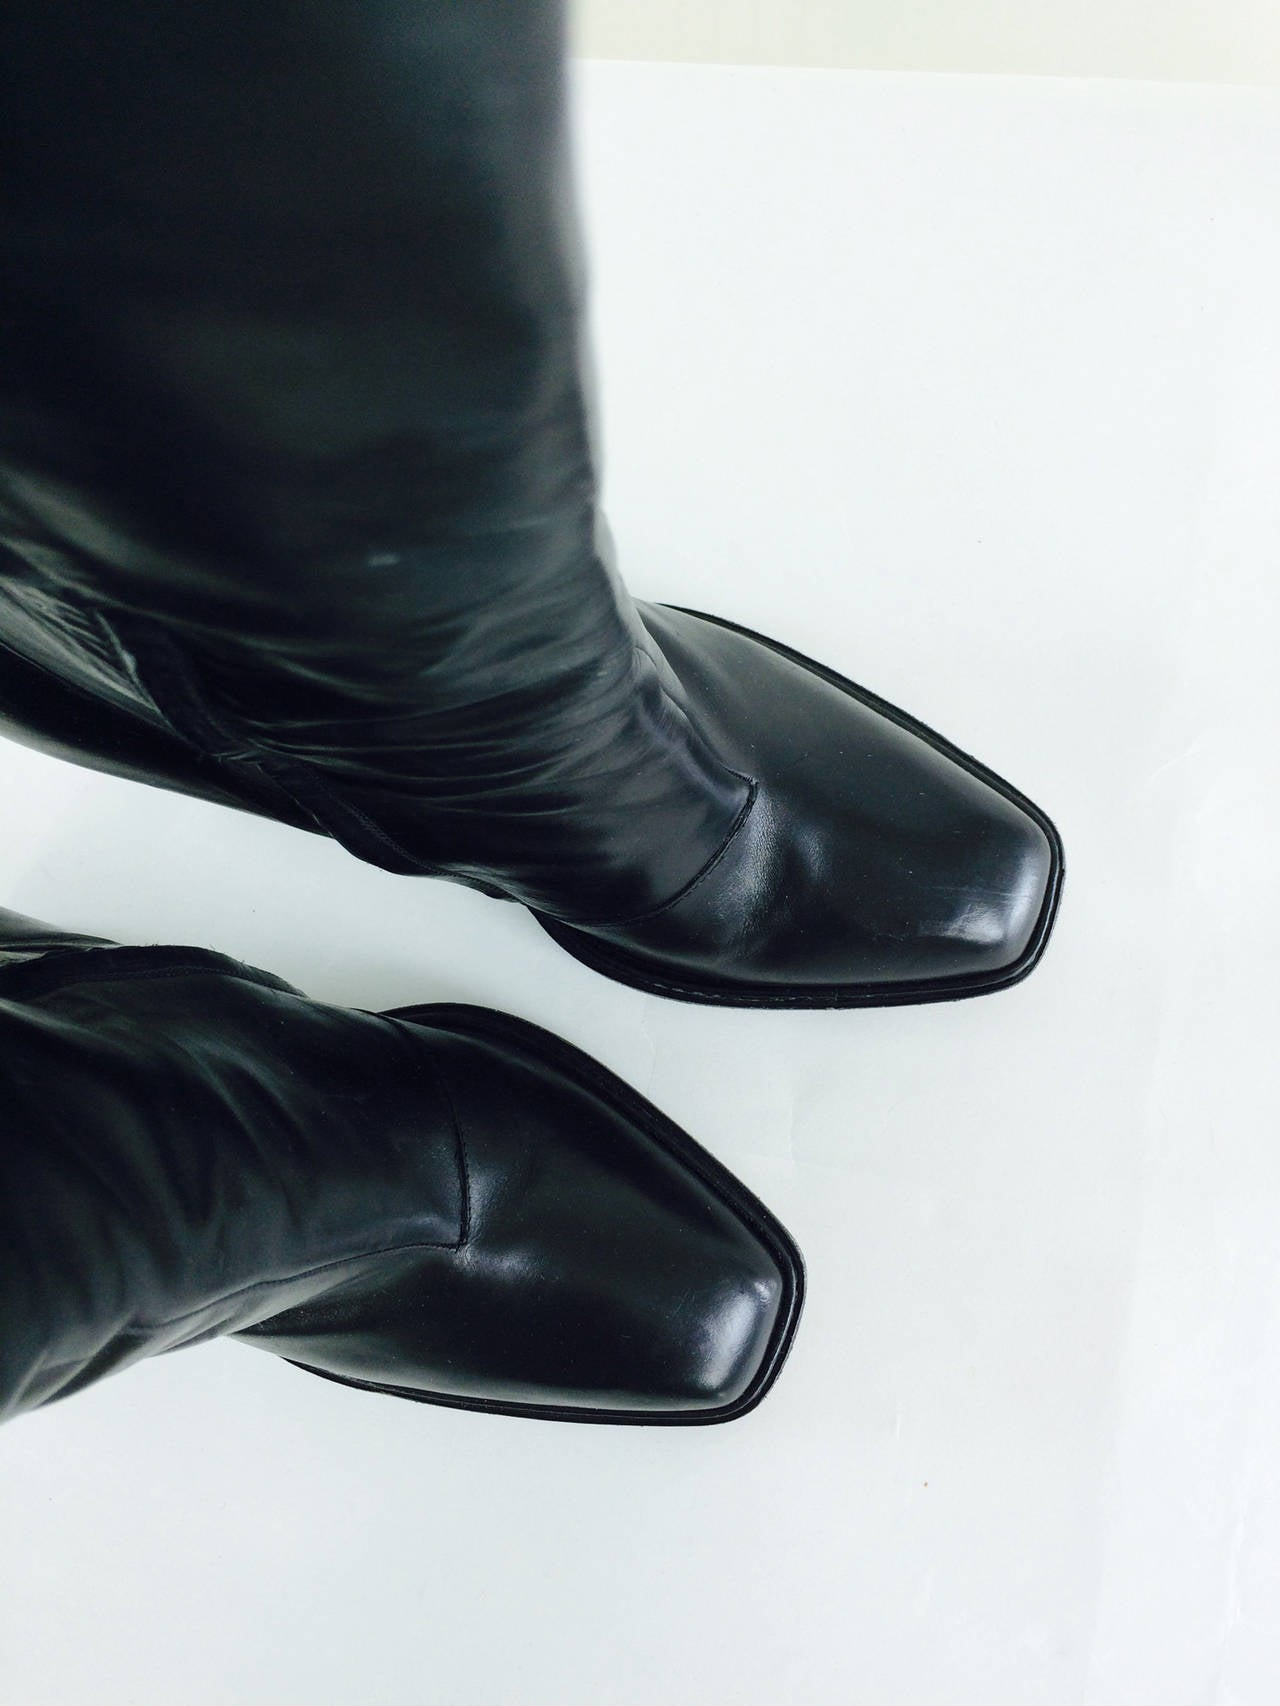 Women's Mason Martin Margiela plexi heel mid calf black leather boots 39 1/2